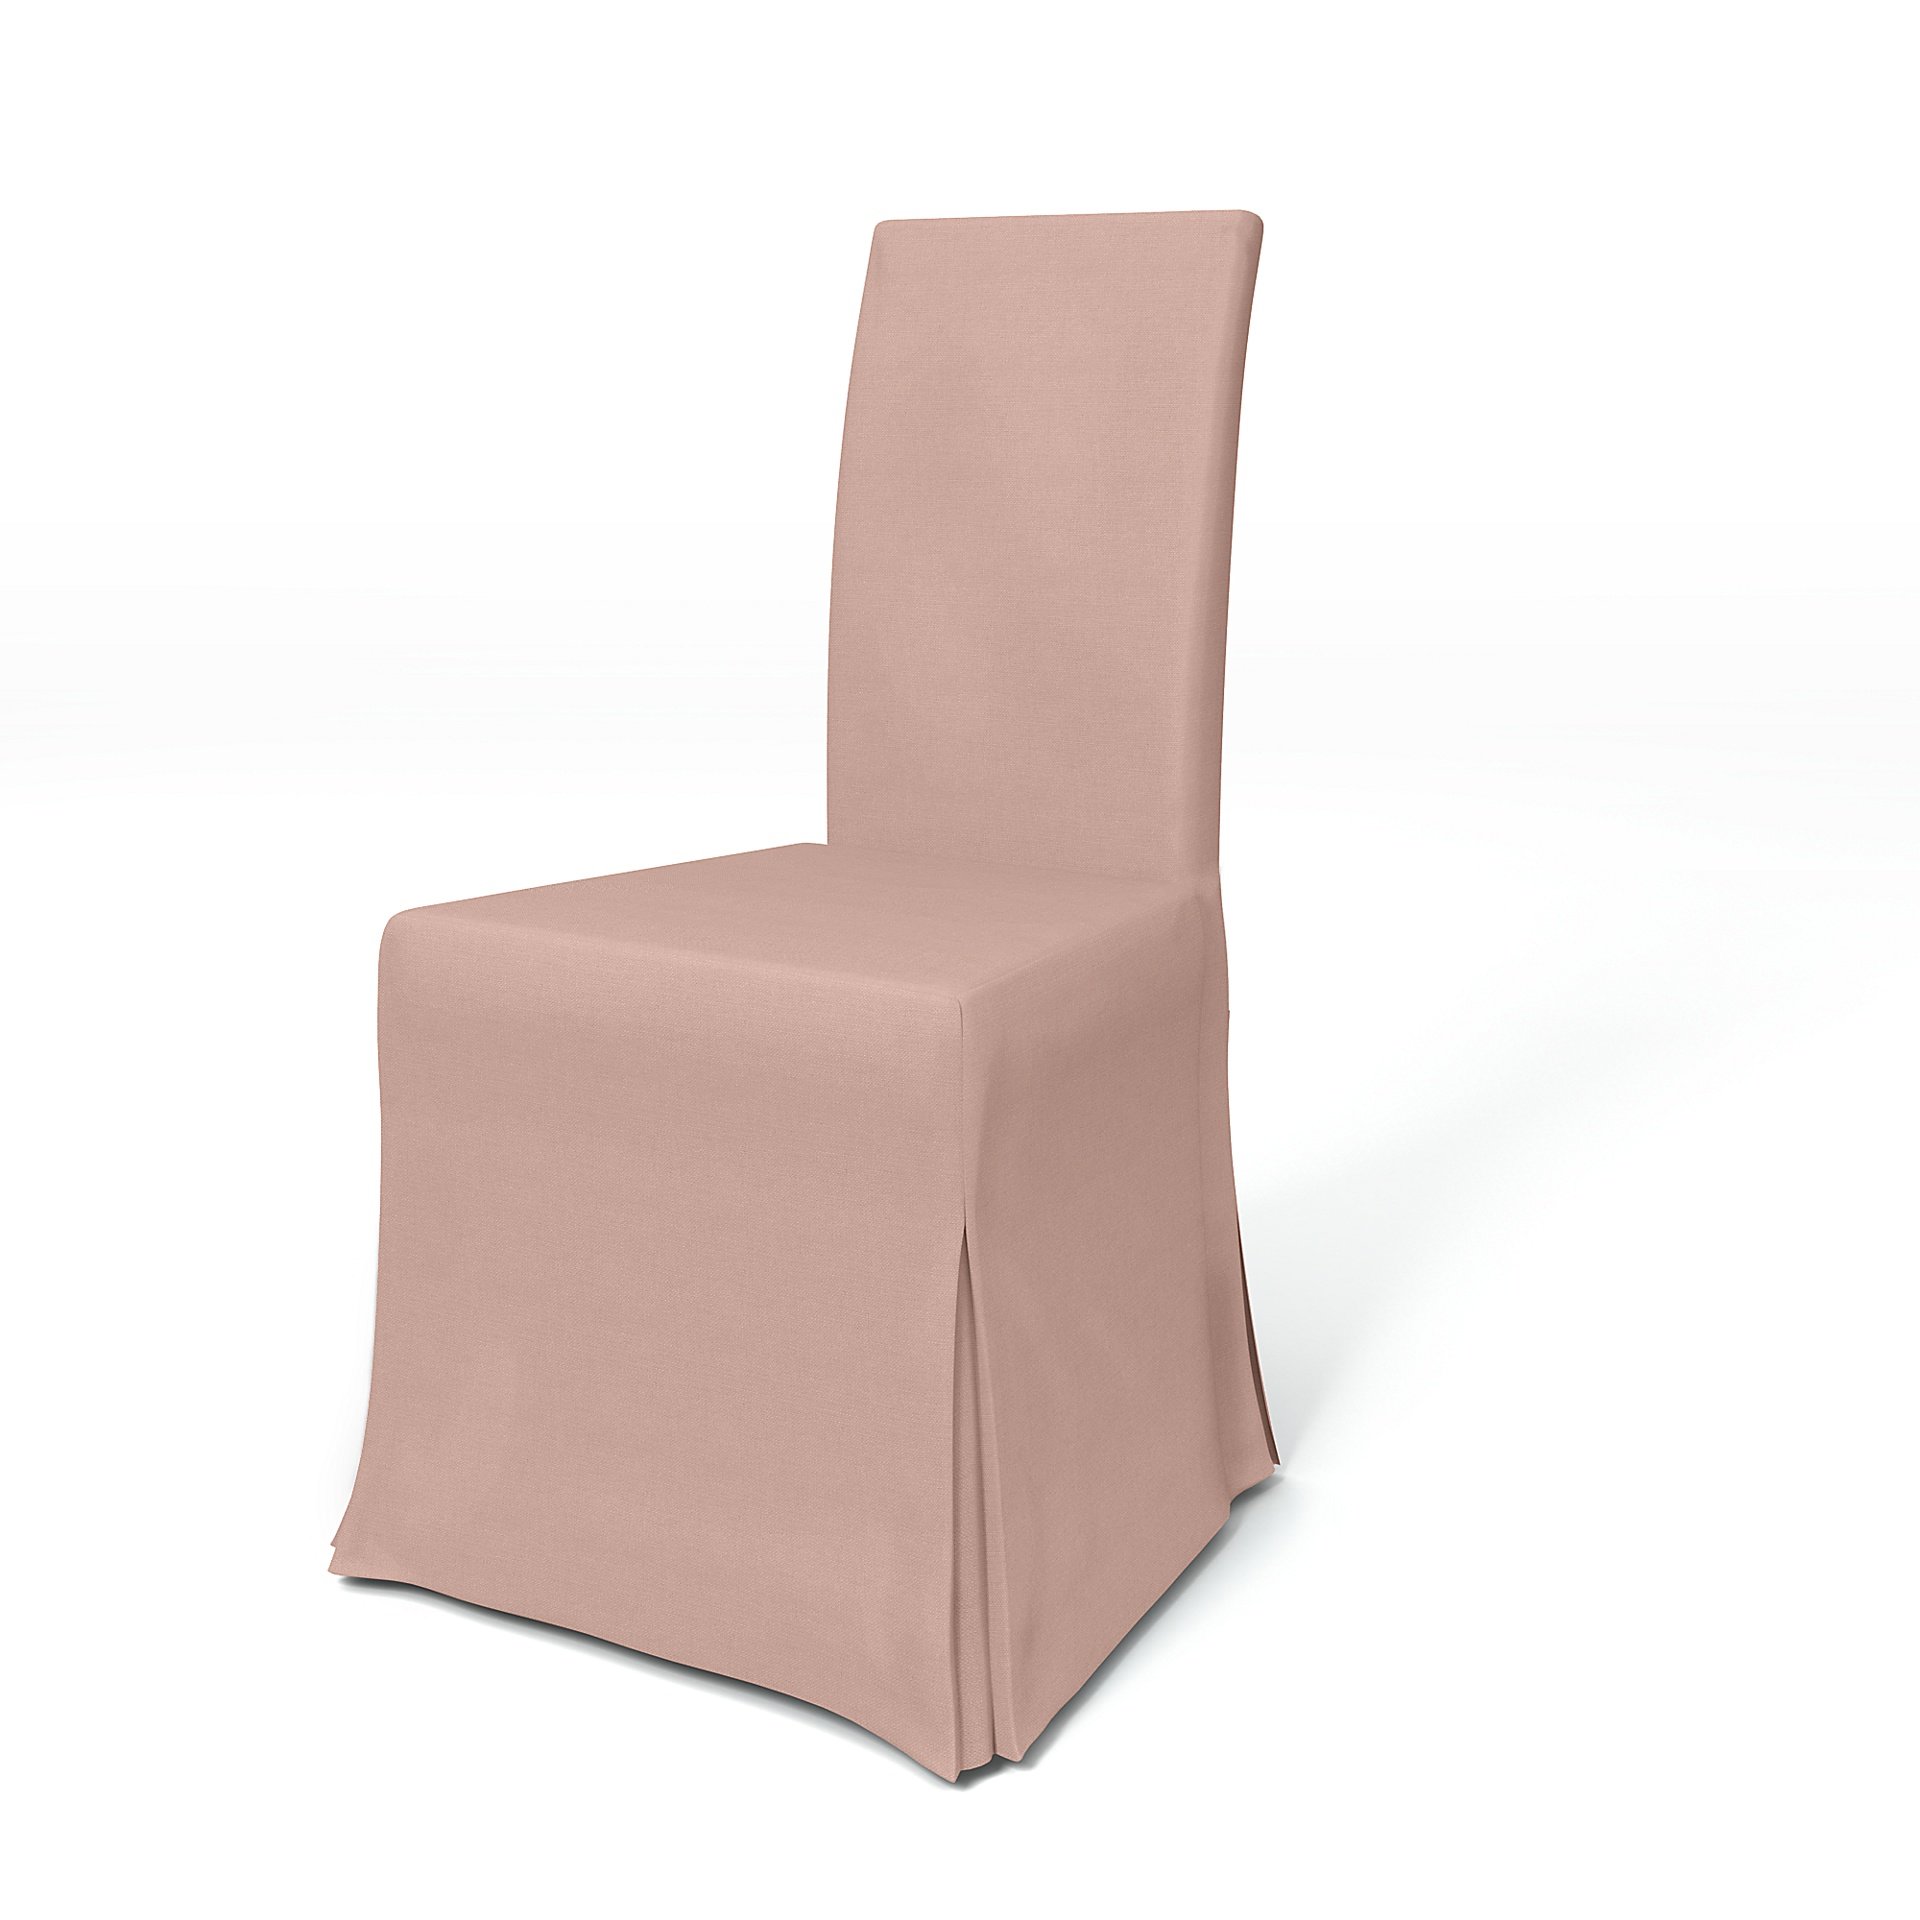 IKEA - Harry Dining Chair Cover, Blush, Linen - Bemz